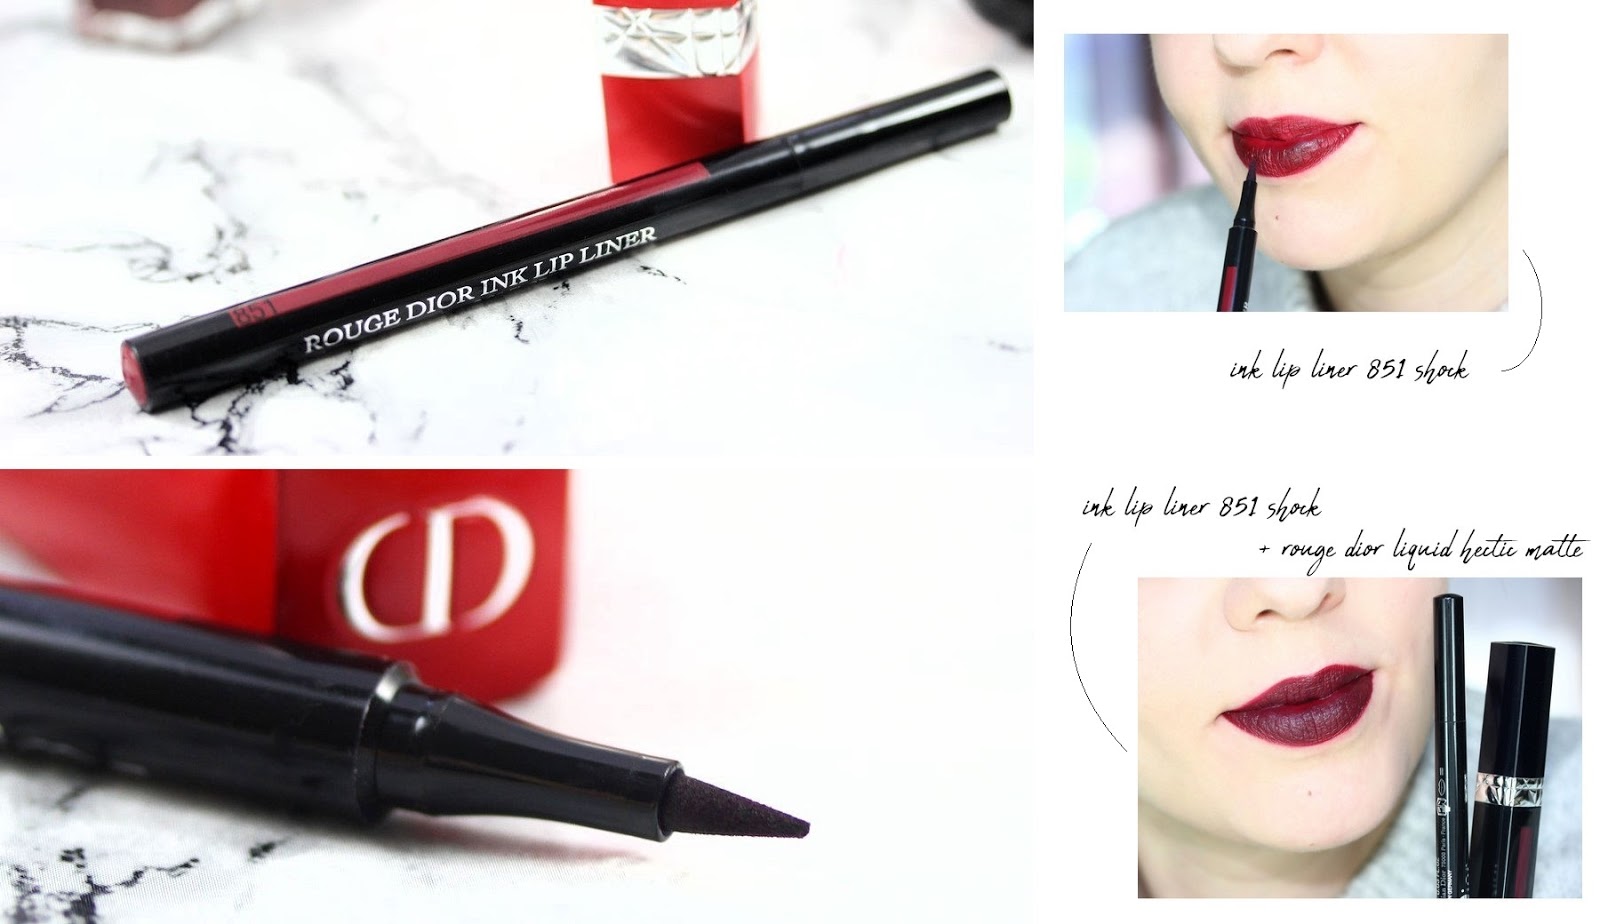 rouge dior ink lip liner review